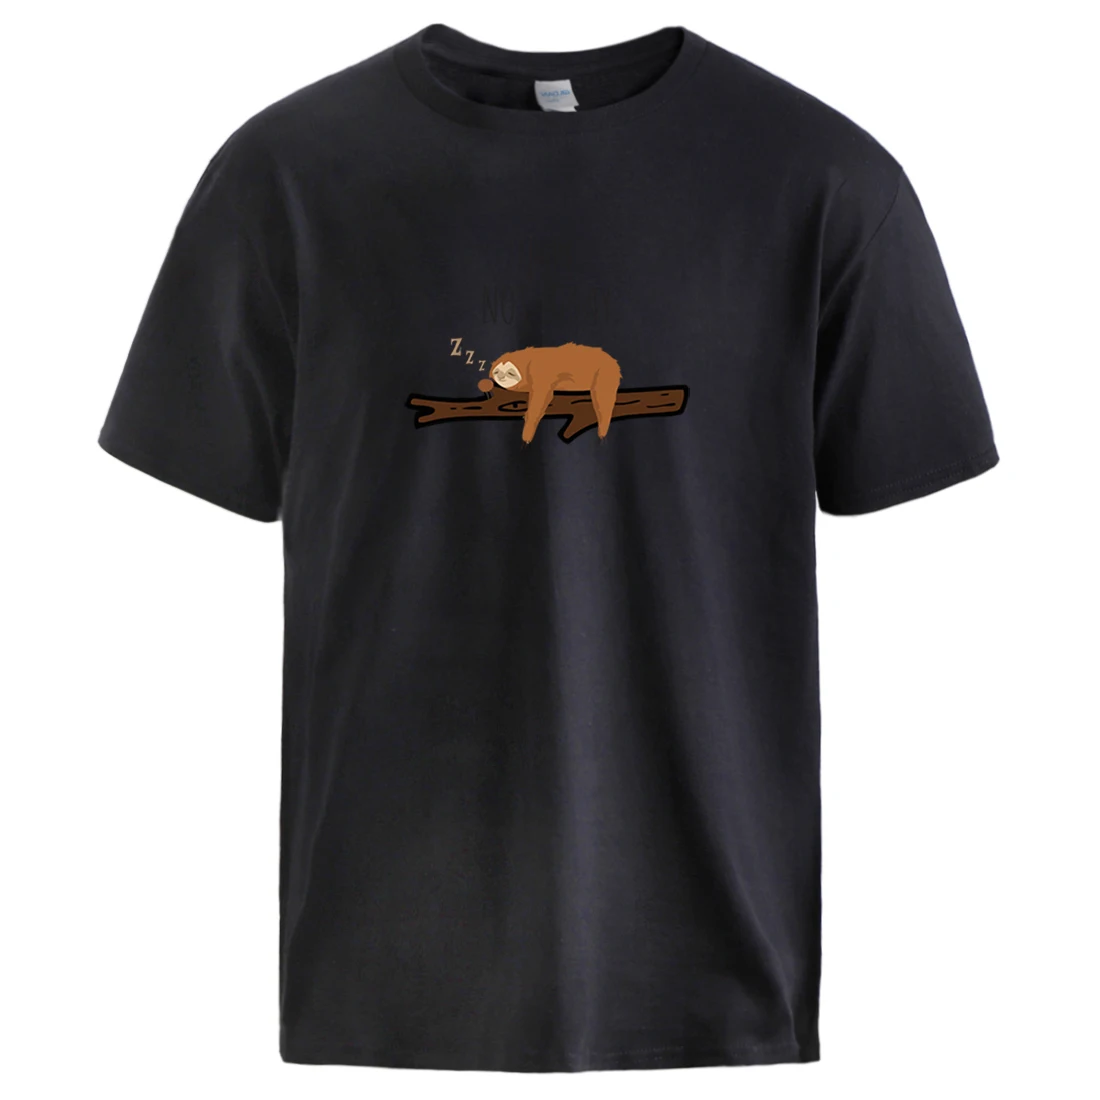 

Men Tshirts Nope Lazy Sloth Cartoon Print T-shirts 2020 Short Sleeve Cotton Tshirt Summer Leisure Tee Shirt Streetwear Clothes